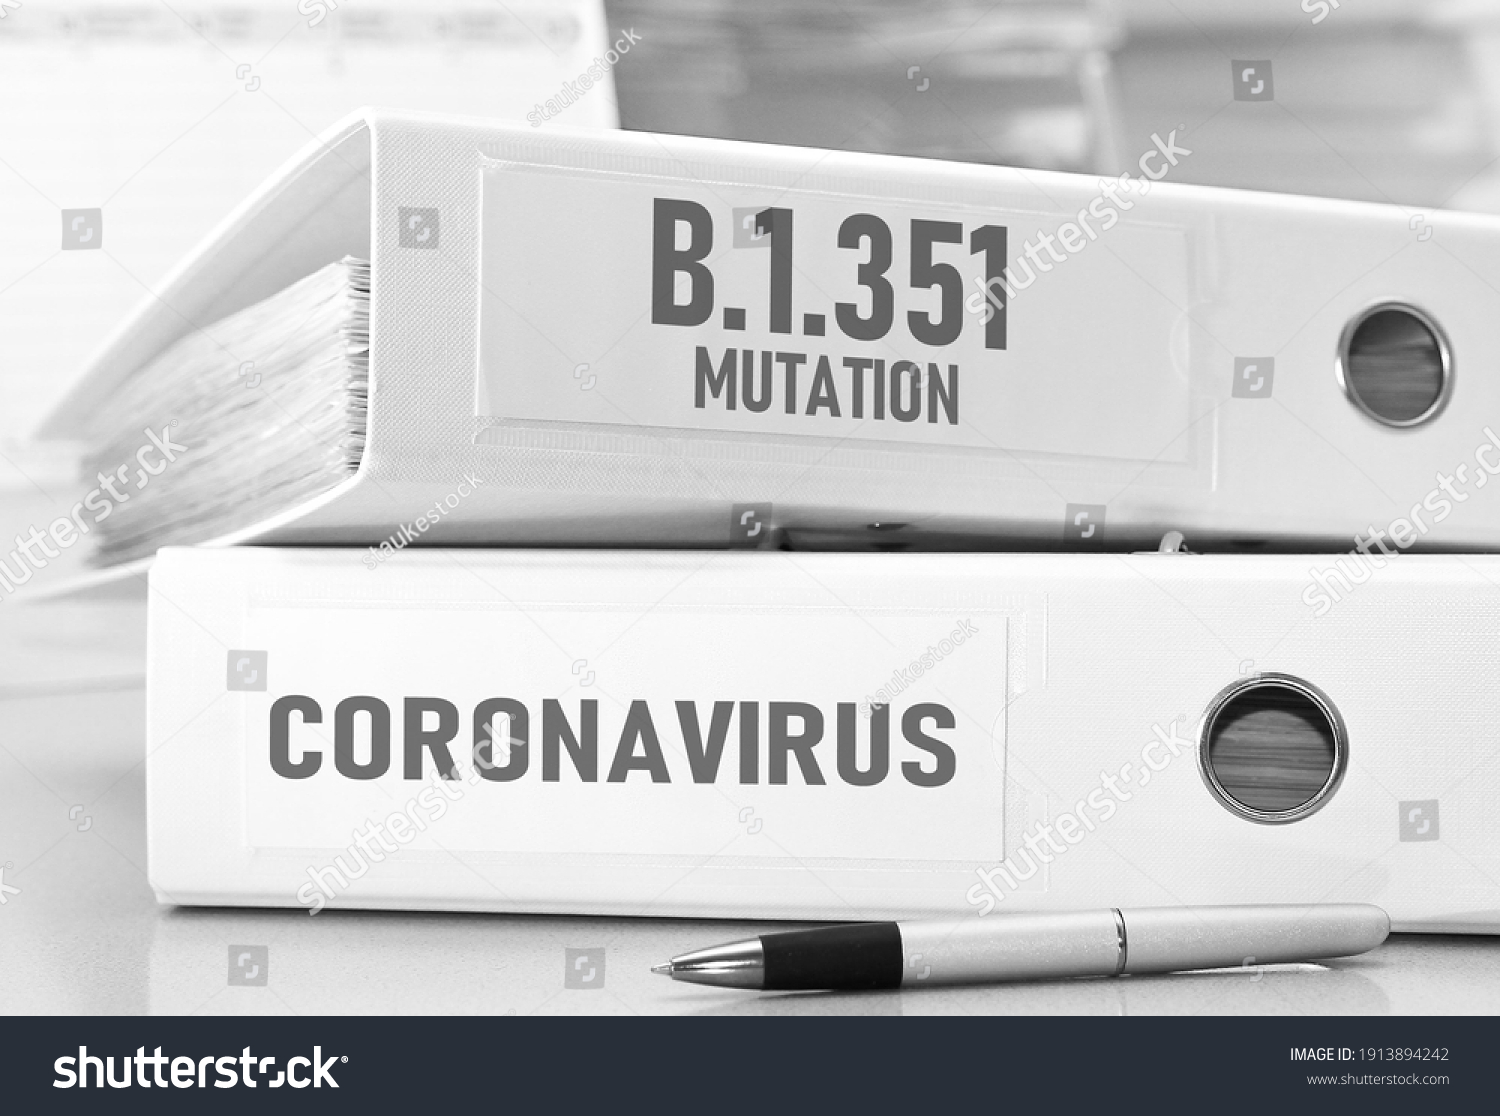 Corona virus mutation B.1.351 - South african variant in folders #1913894242